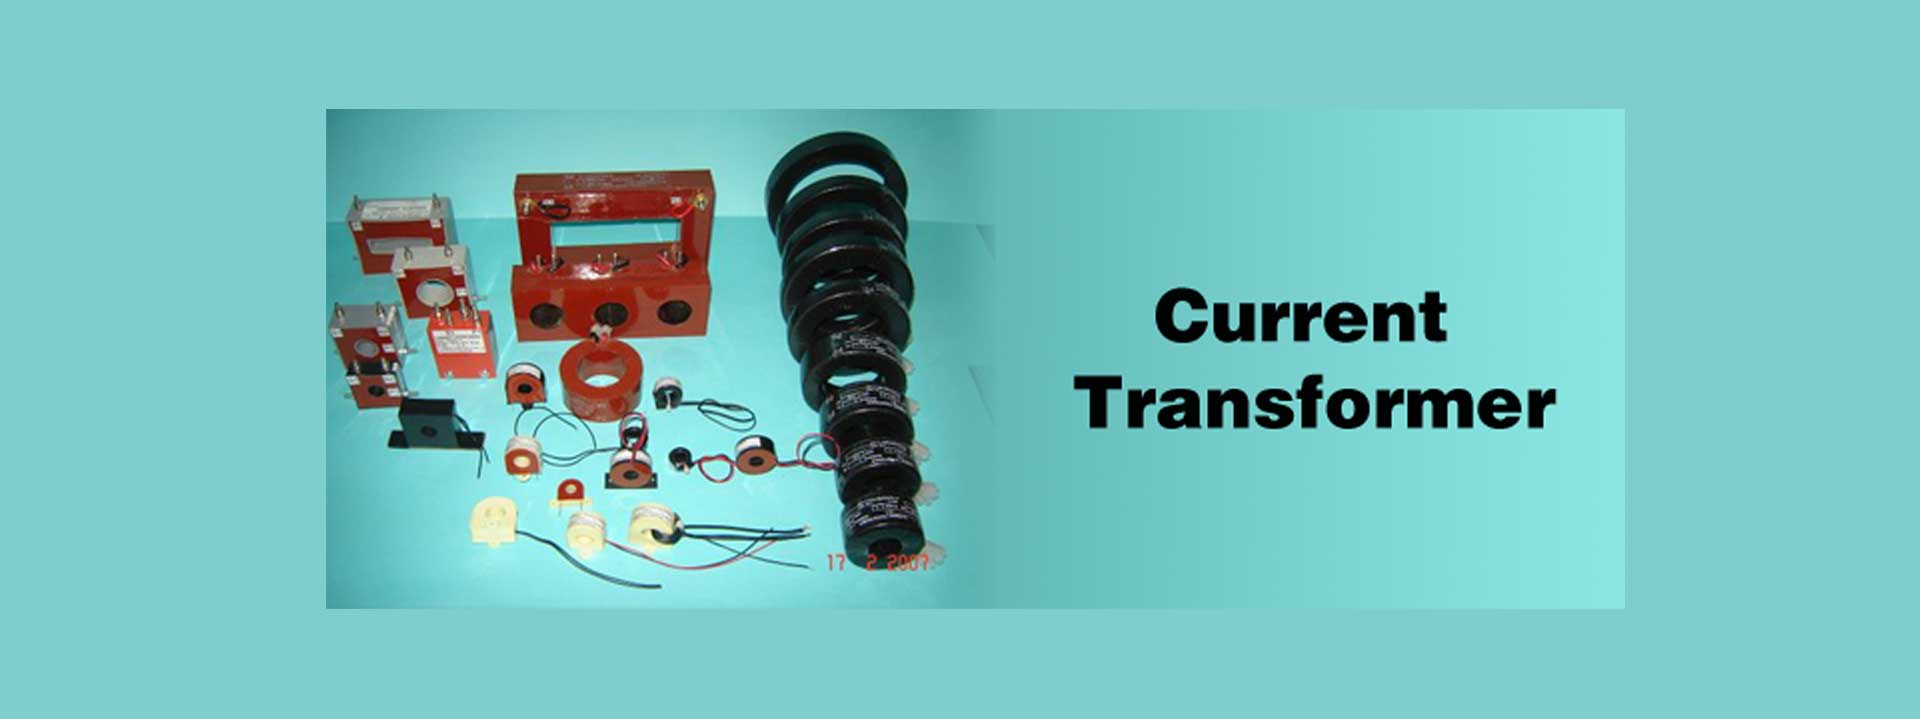 Current Control, Near Tathawade Garden, Karve Nagar, Pune | Manufacturer and Supplier of Current Transformers  